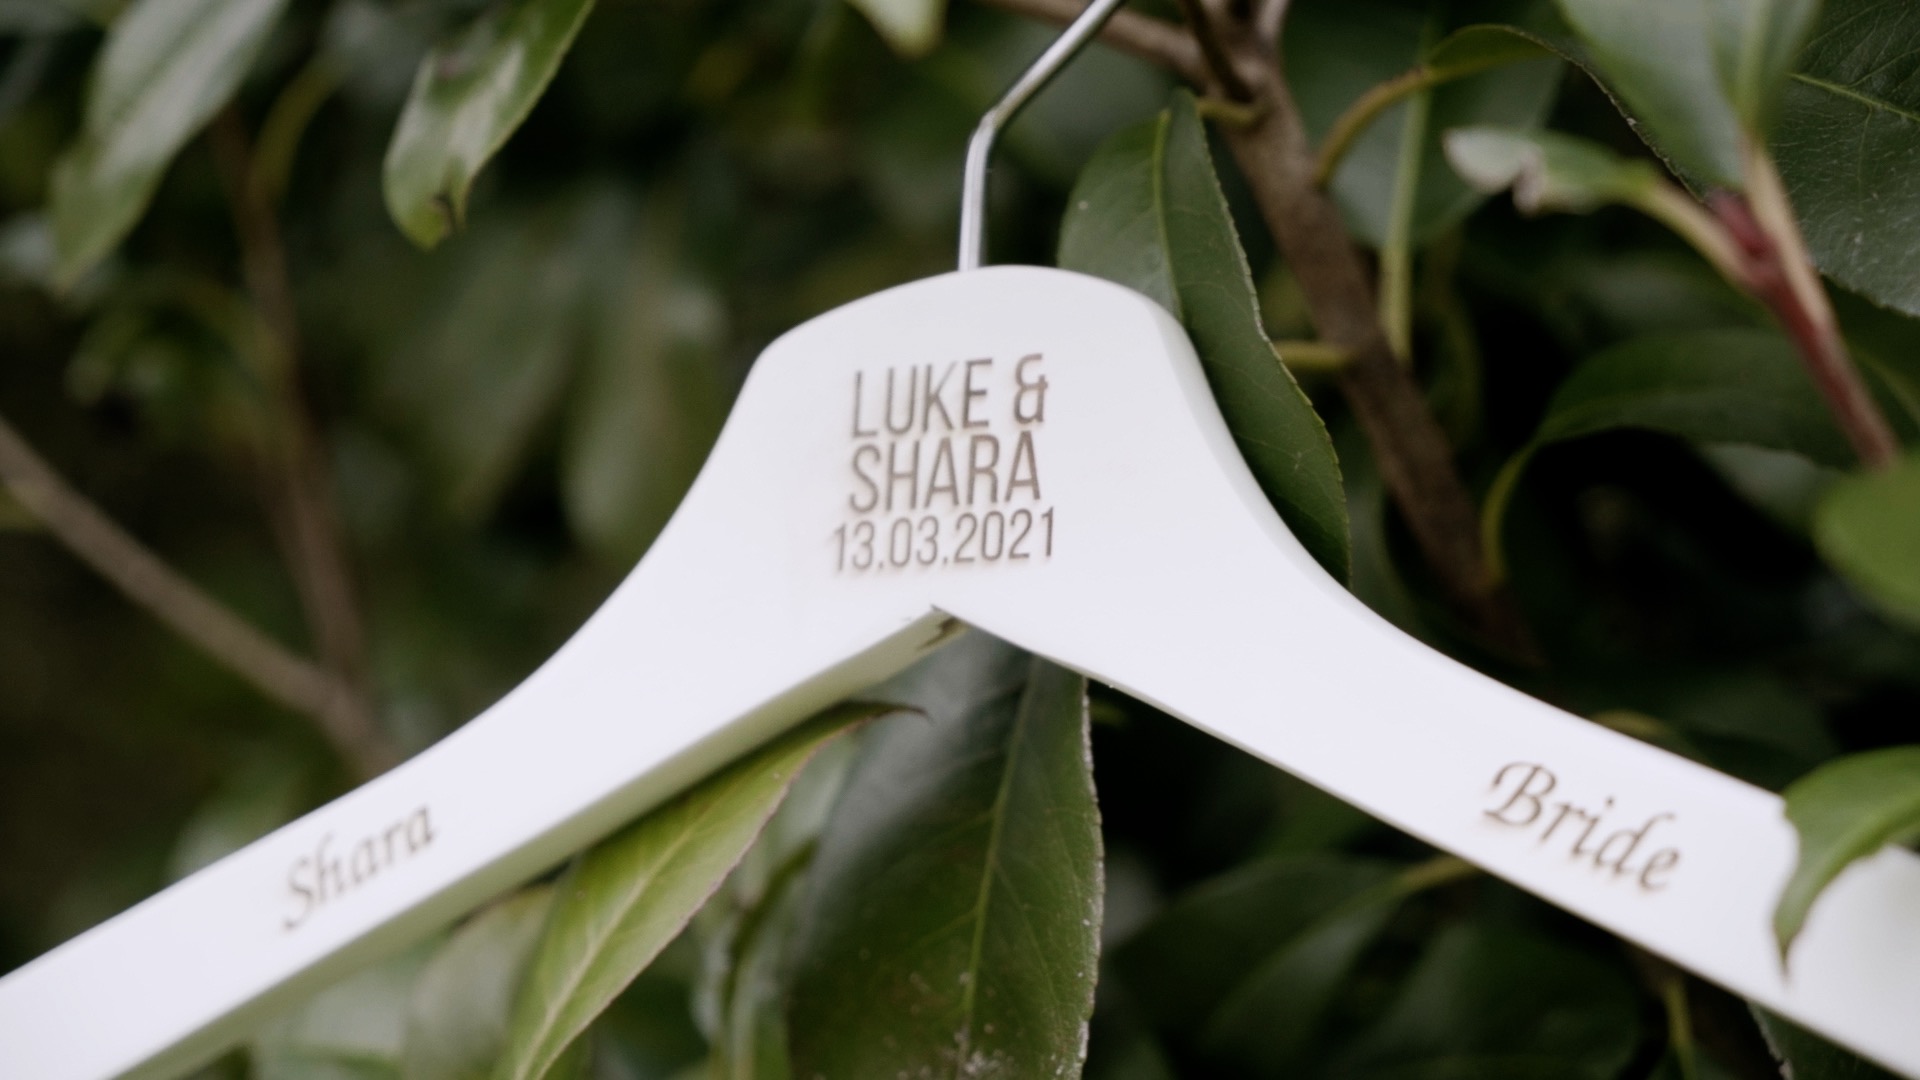 Shara & Luke's wedding in the Southern Highlands